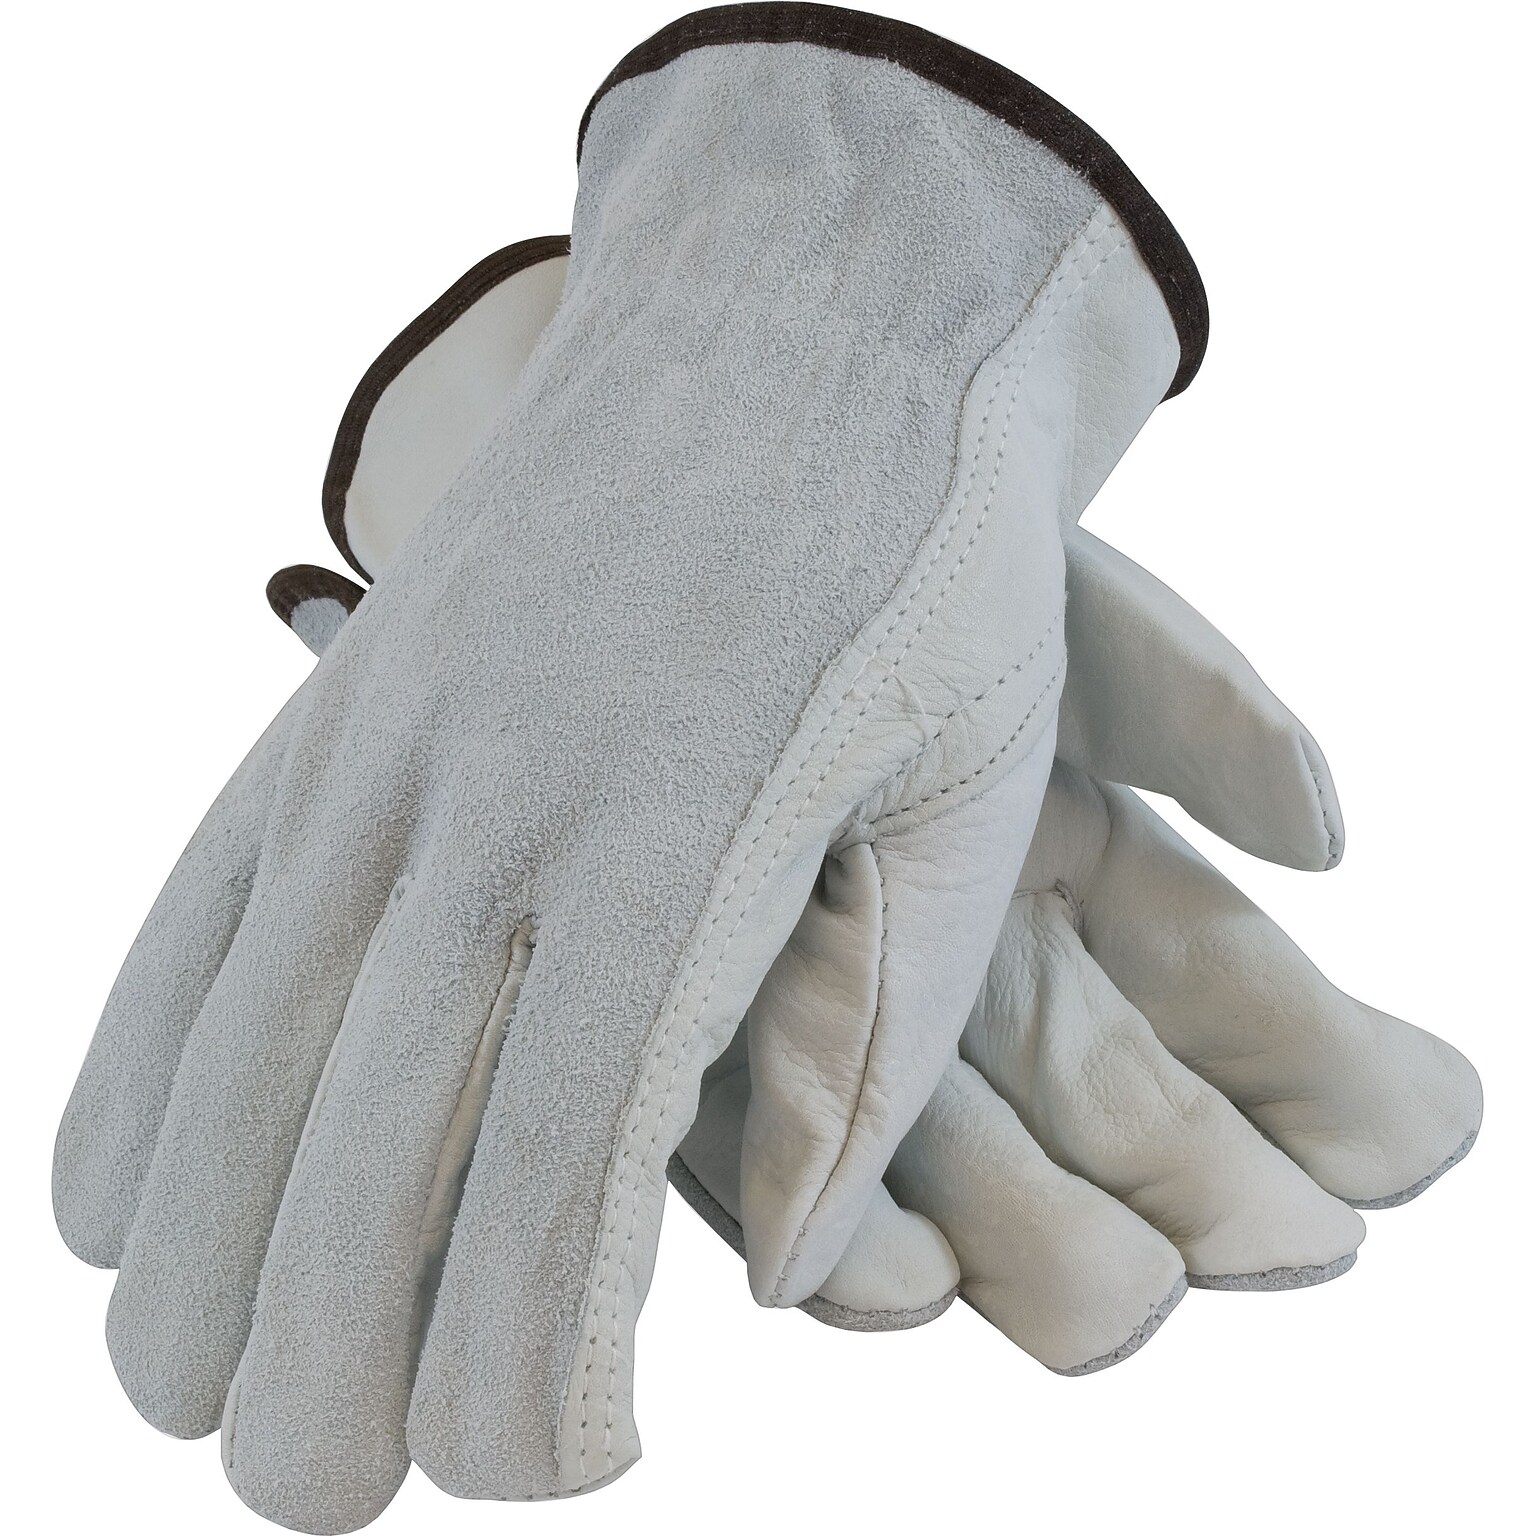 PIP 68-PK-161SB Leather Gloves, Medium, Gray (179956)